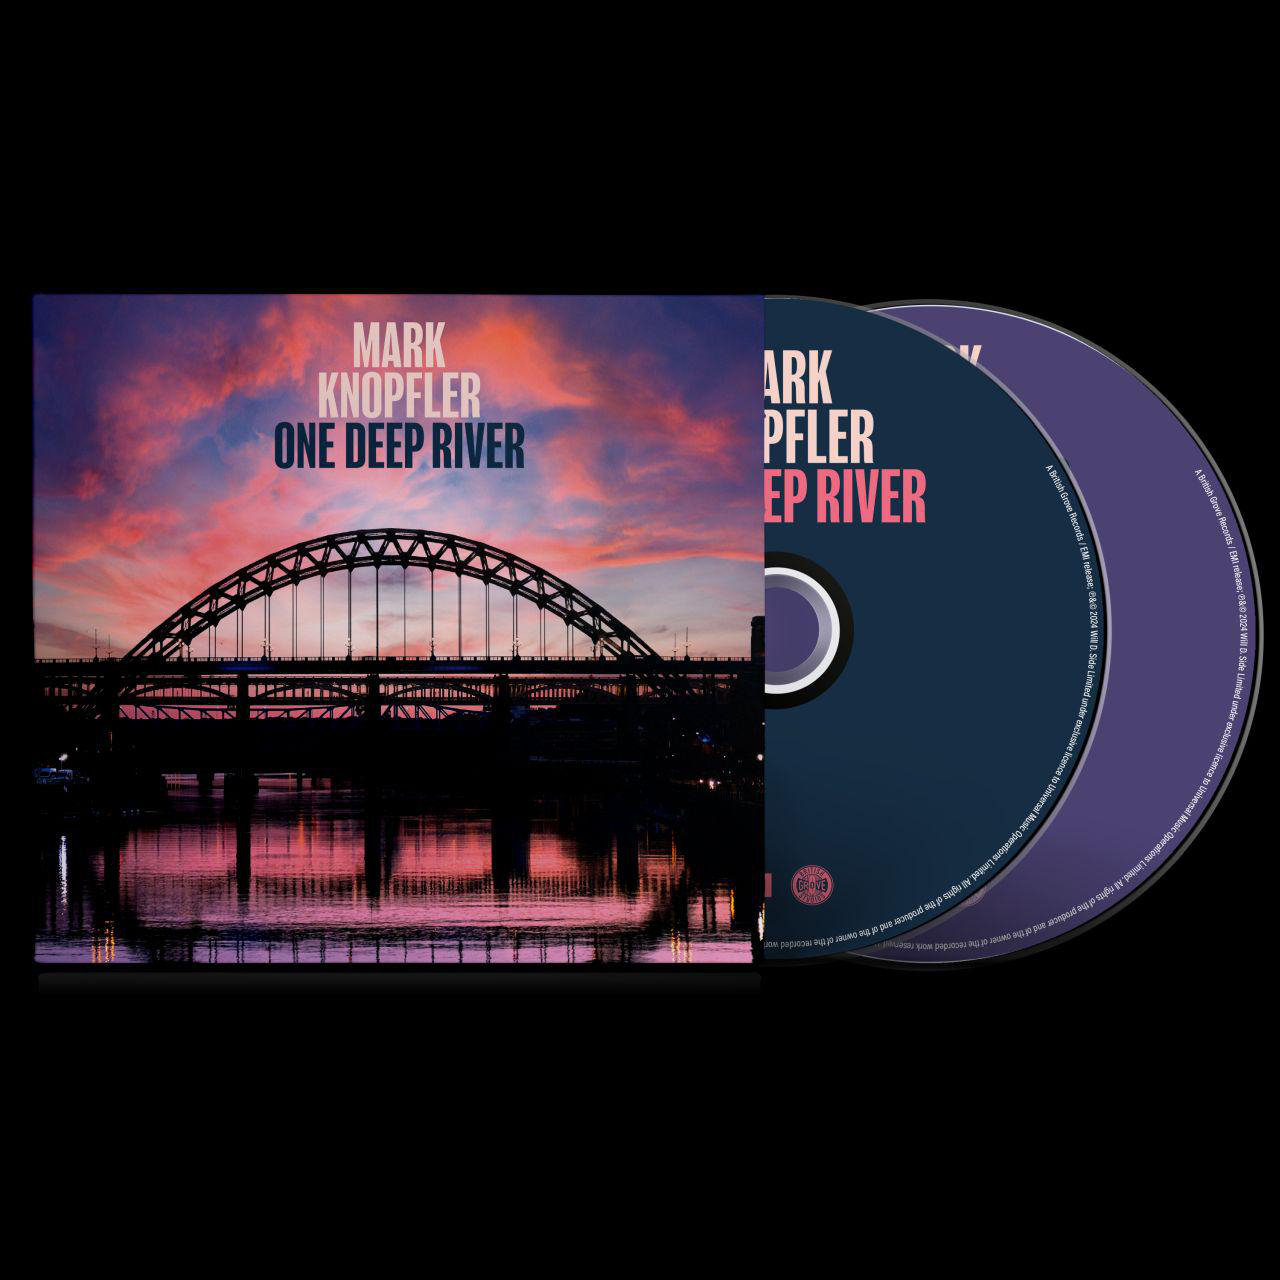 20 - Deep (CD) Knopfler River Mark (2CD Page + Booklet) Digipack One -